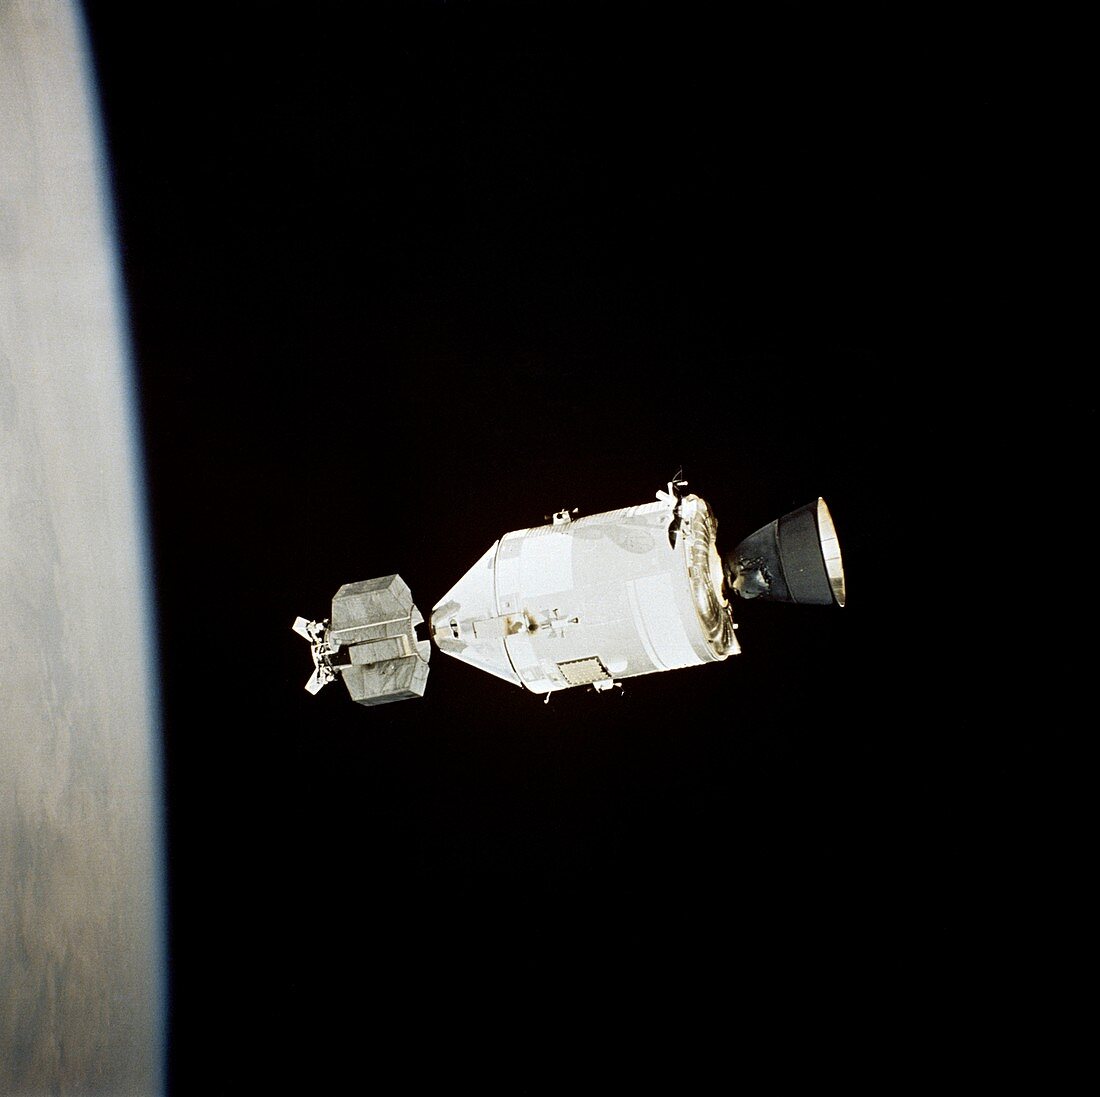 Apollo CSM-111,astronaut photograph